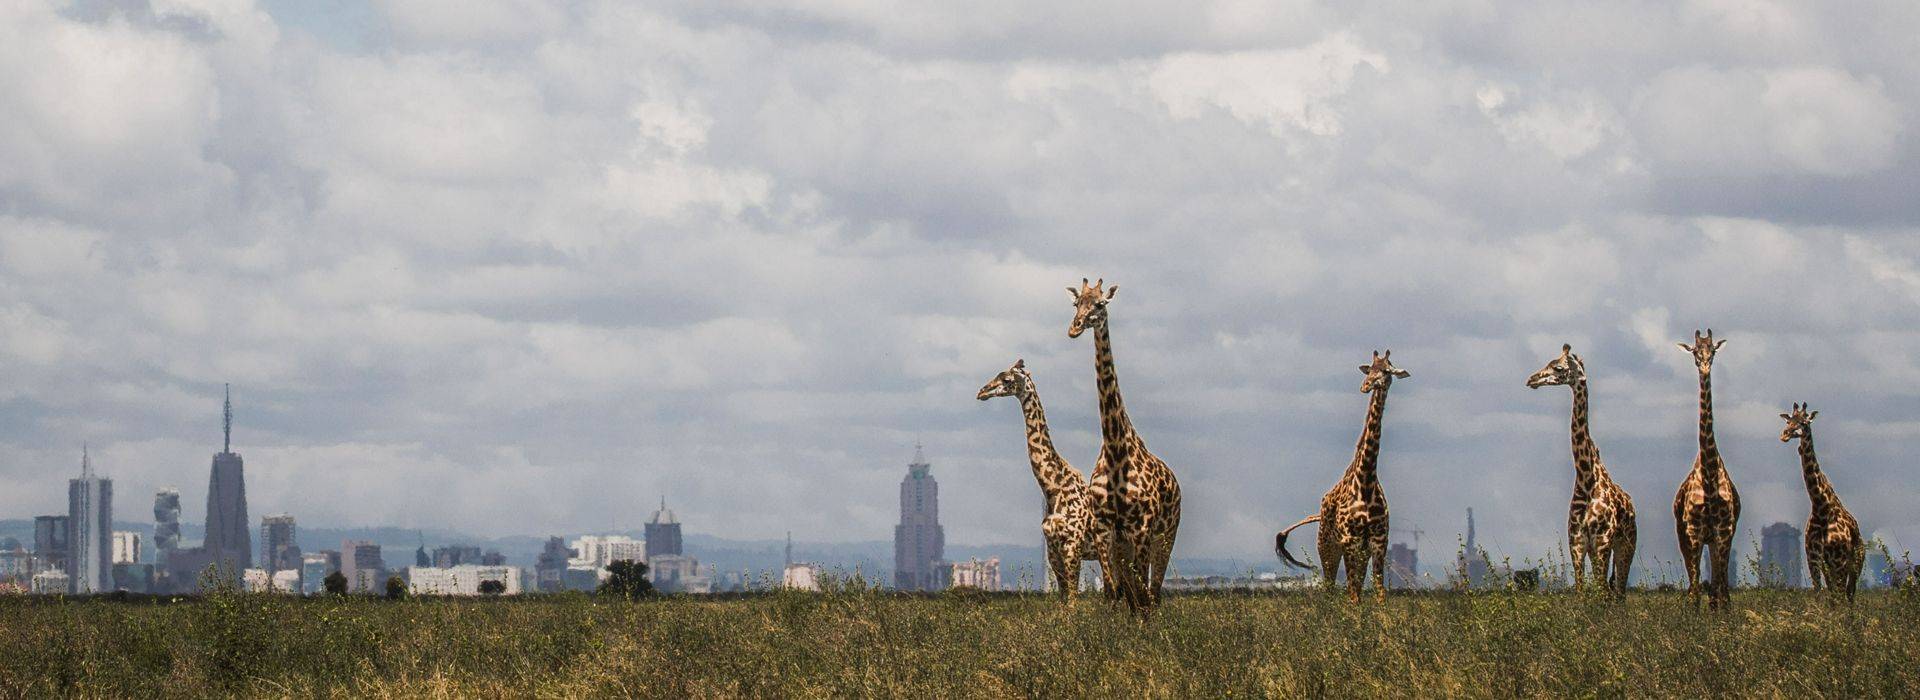 African Travel Inc Kenya -The Emakoko_ Nairobi Skyline decorated by giraffes.jpg